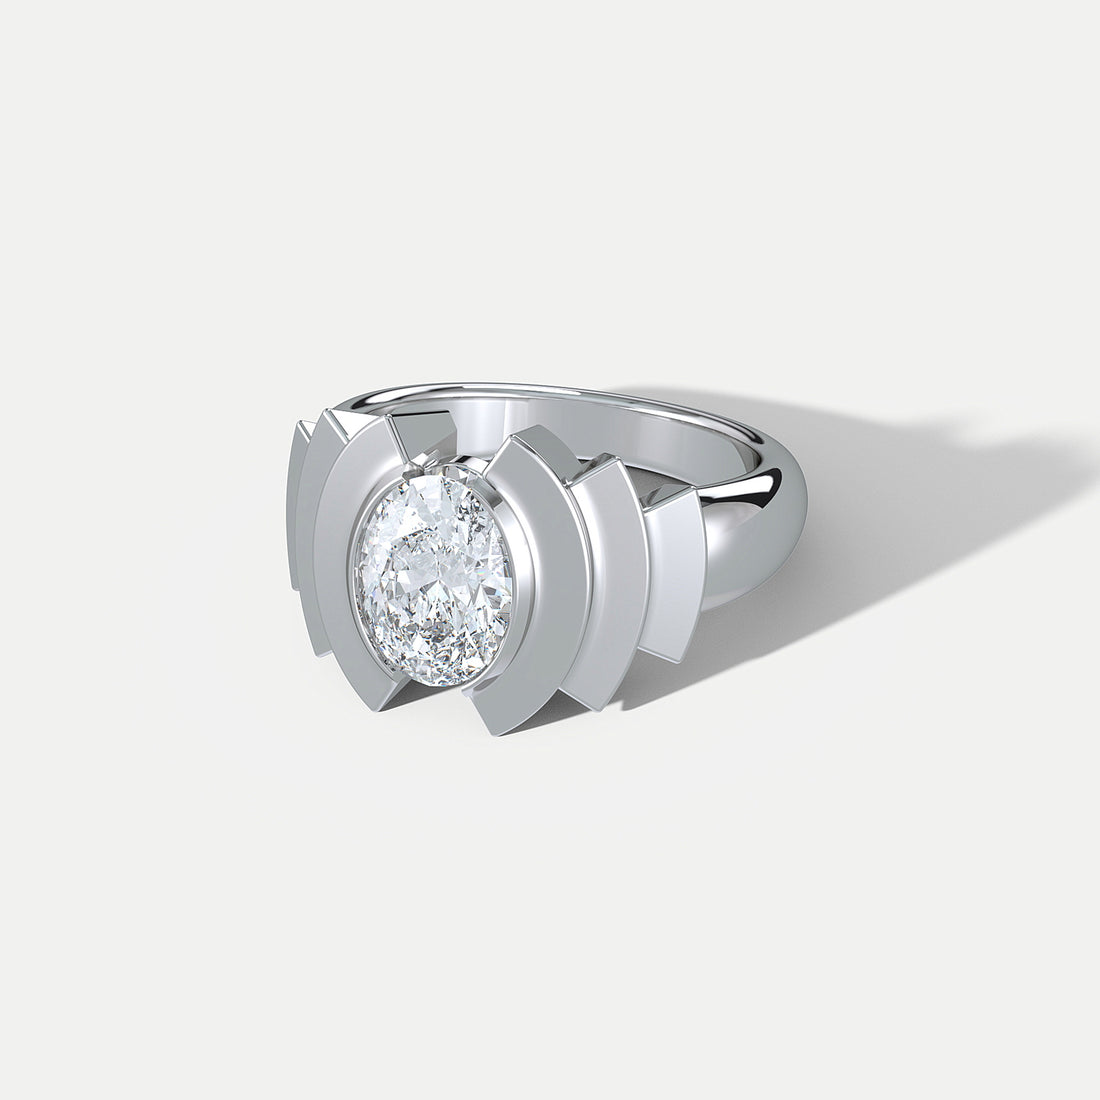  Oval Diamond Beat Platinum Ring by Hannah Martin | The Cut London